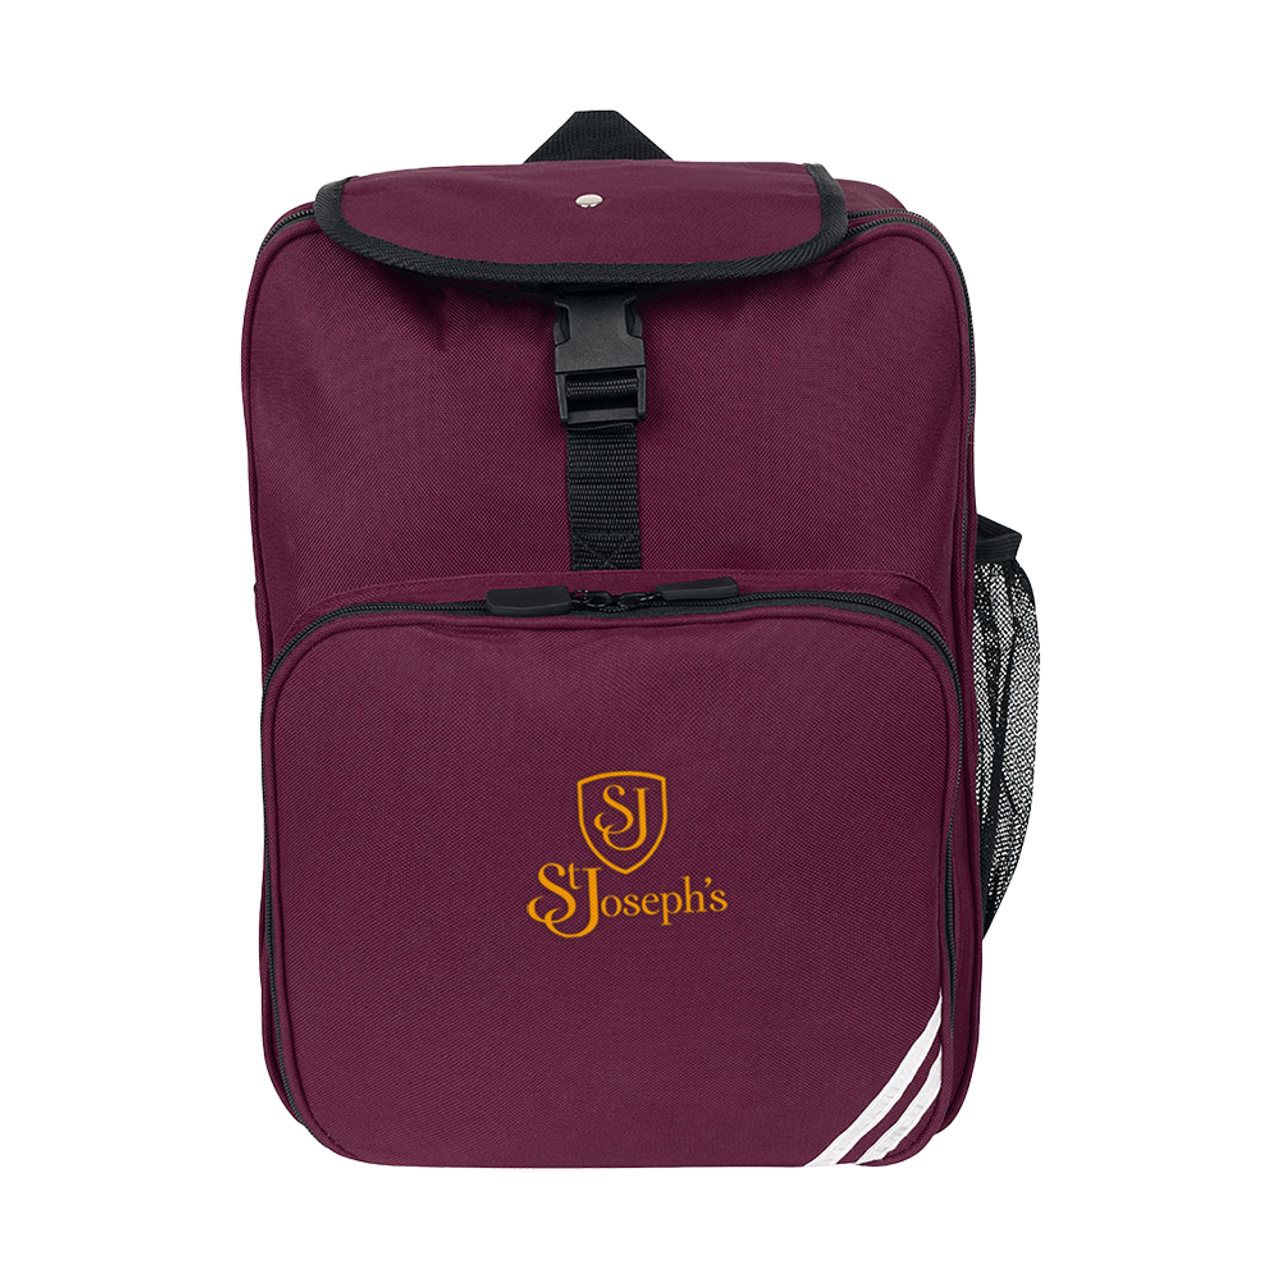 St Joseph's Primary School Large Bag